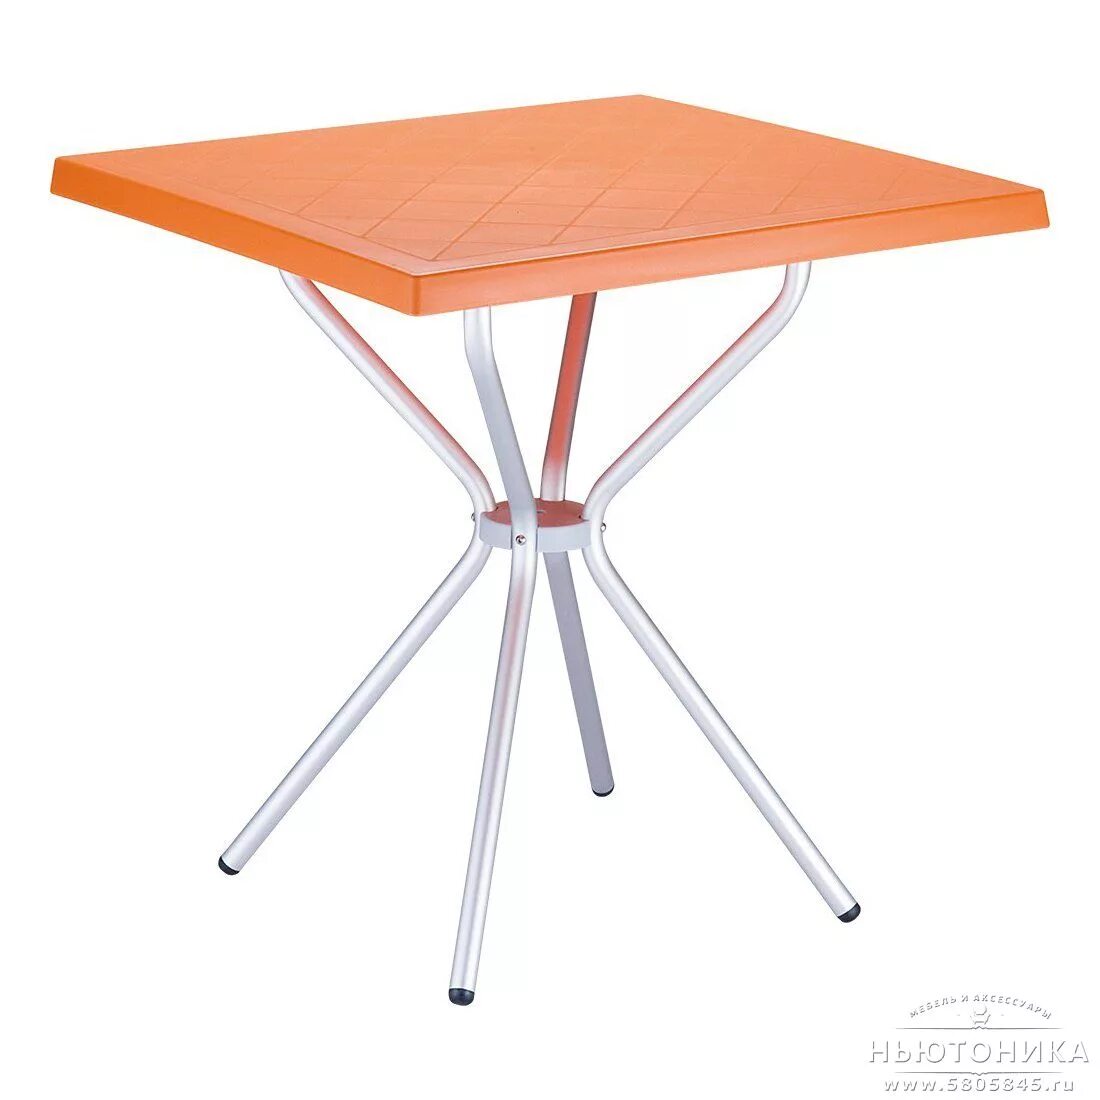 Пластиковый кухонный стол. Стол для кафе 700х700. Стол Siesta. Стол Сиеста 85. Оранжевый стол.